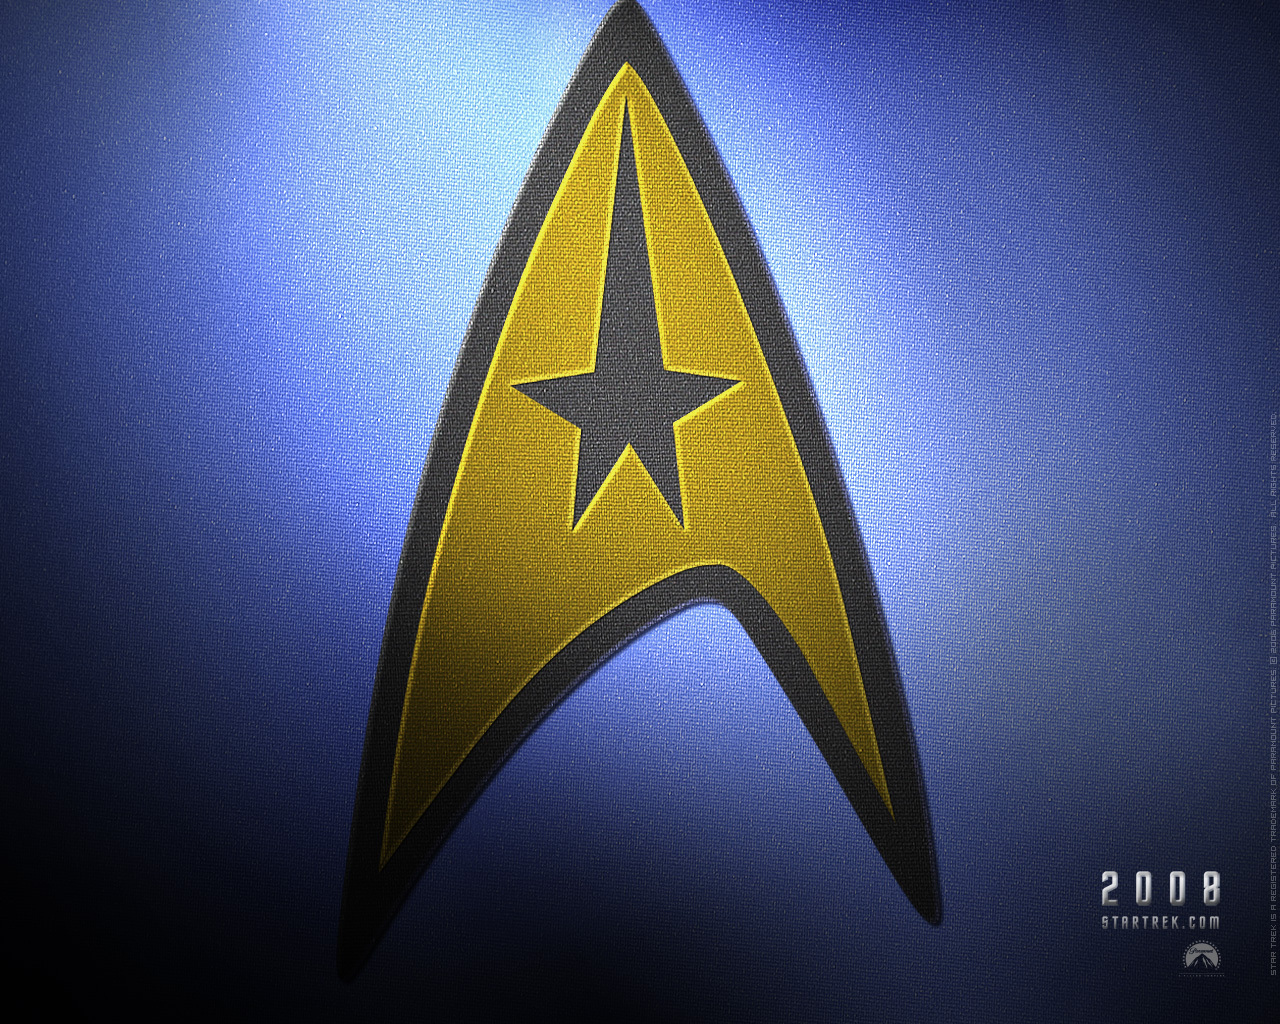 TOS wallpaper - Star Trek: The Original Series Wallpaper (3927992 ...